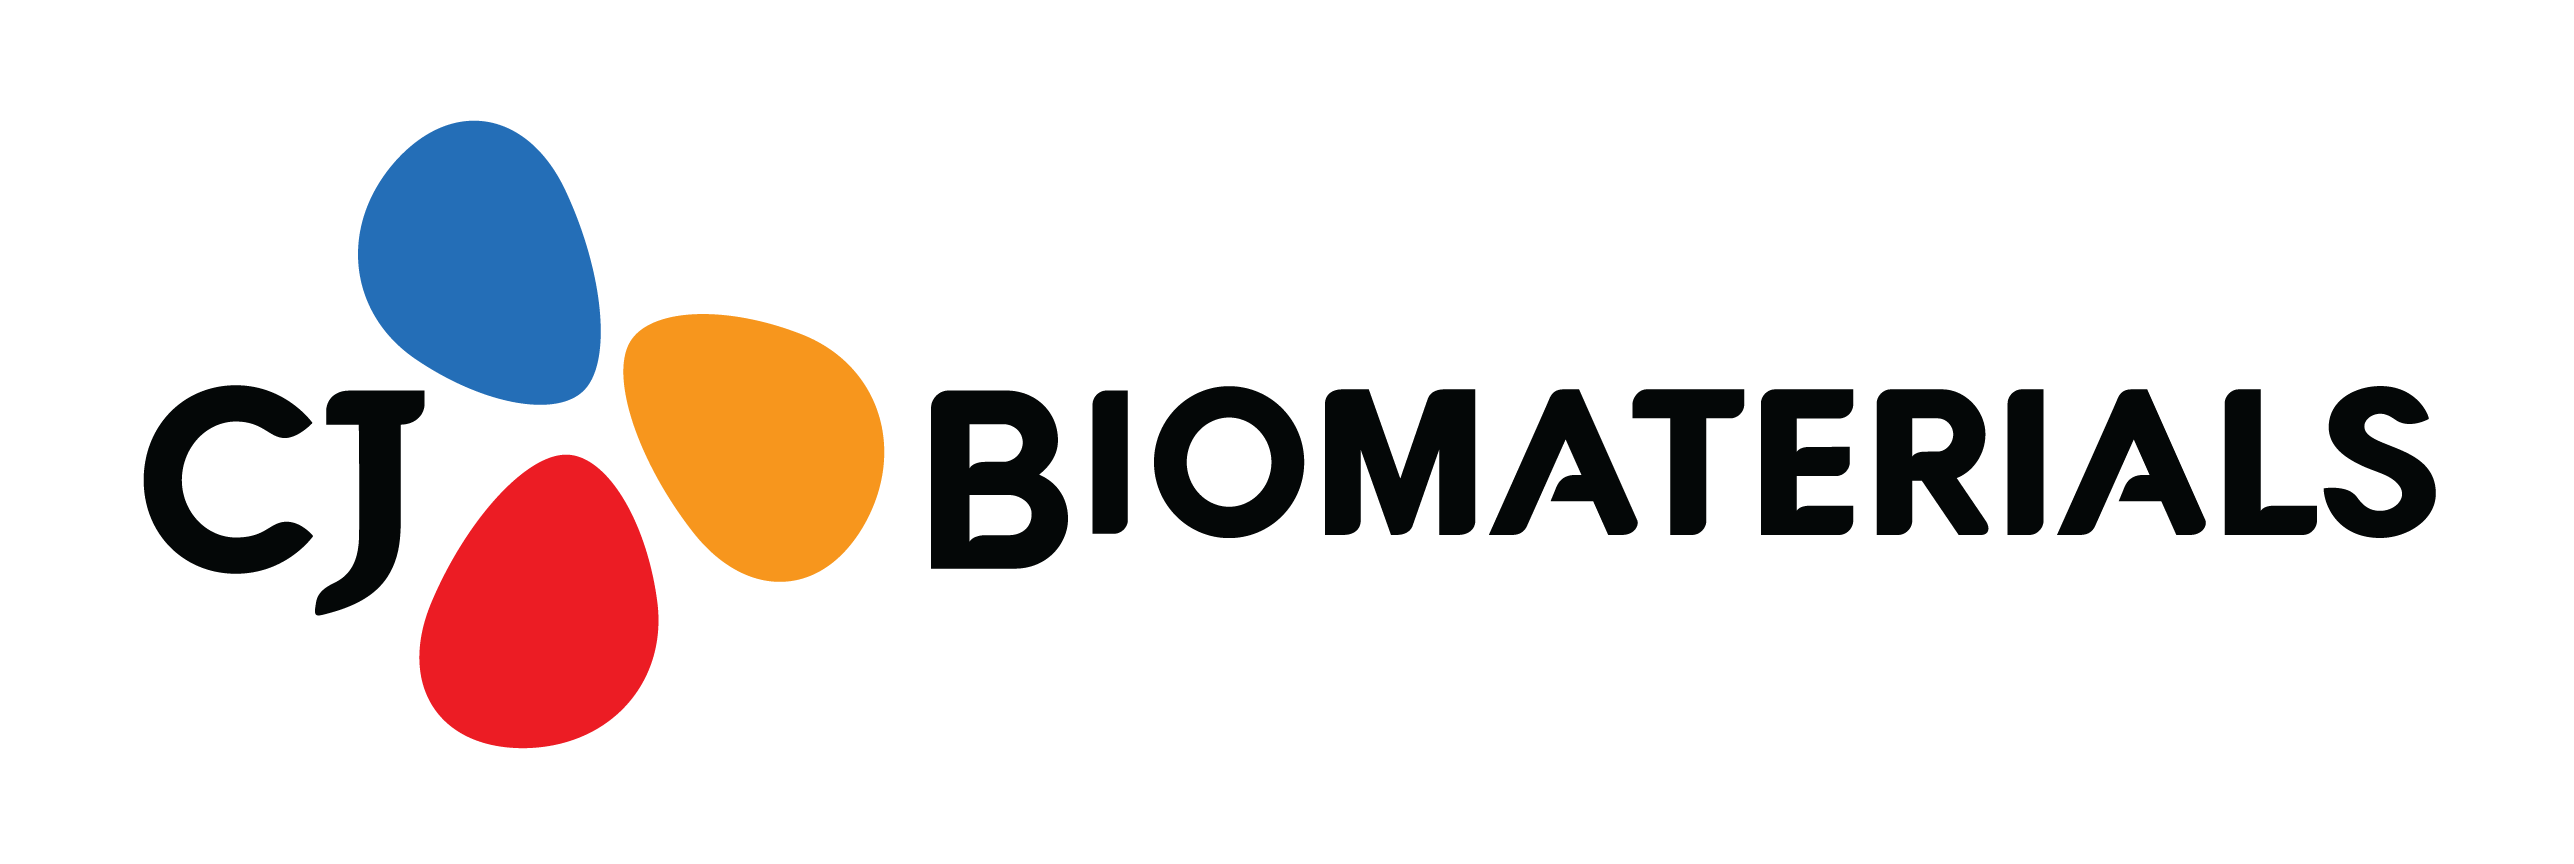 CJ_Biomaterials_logo_horizontal_RGB@4x